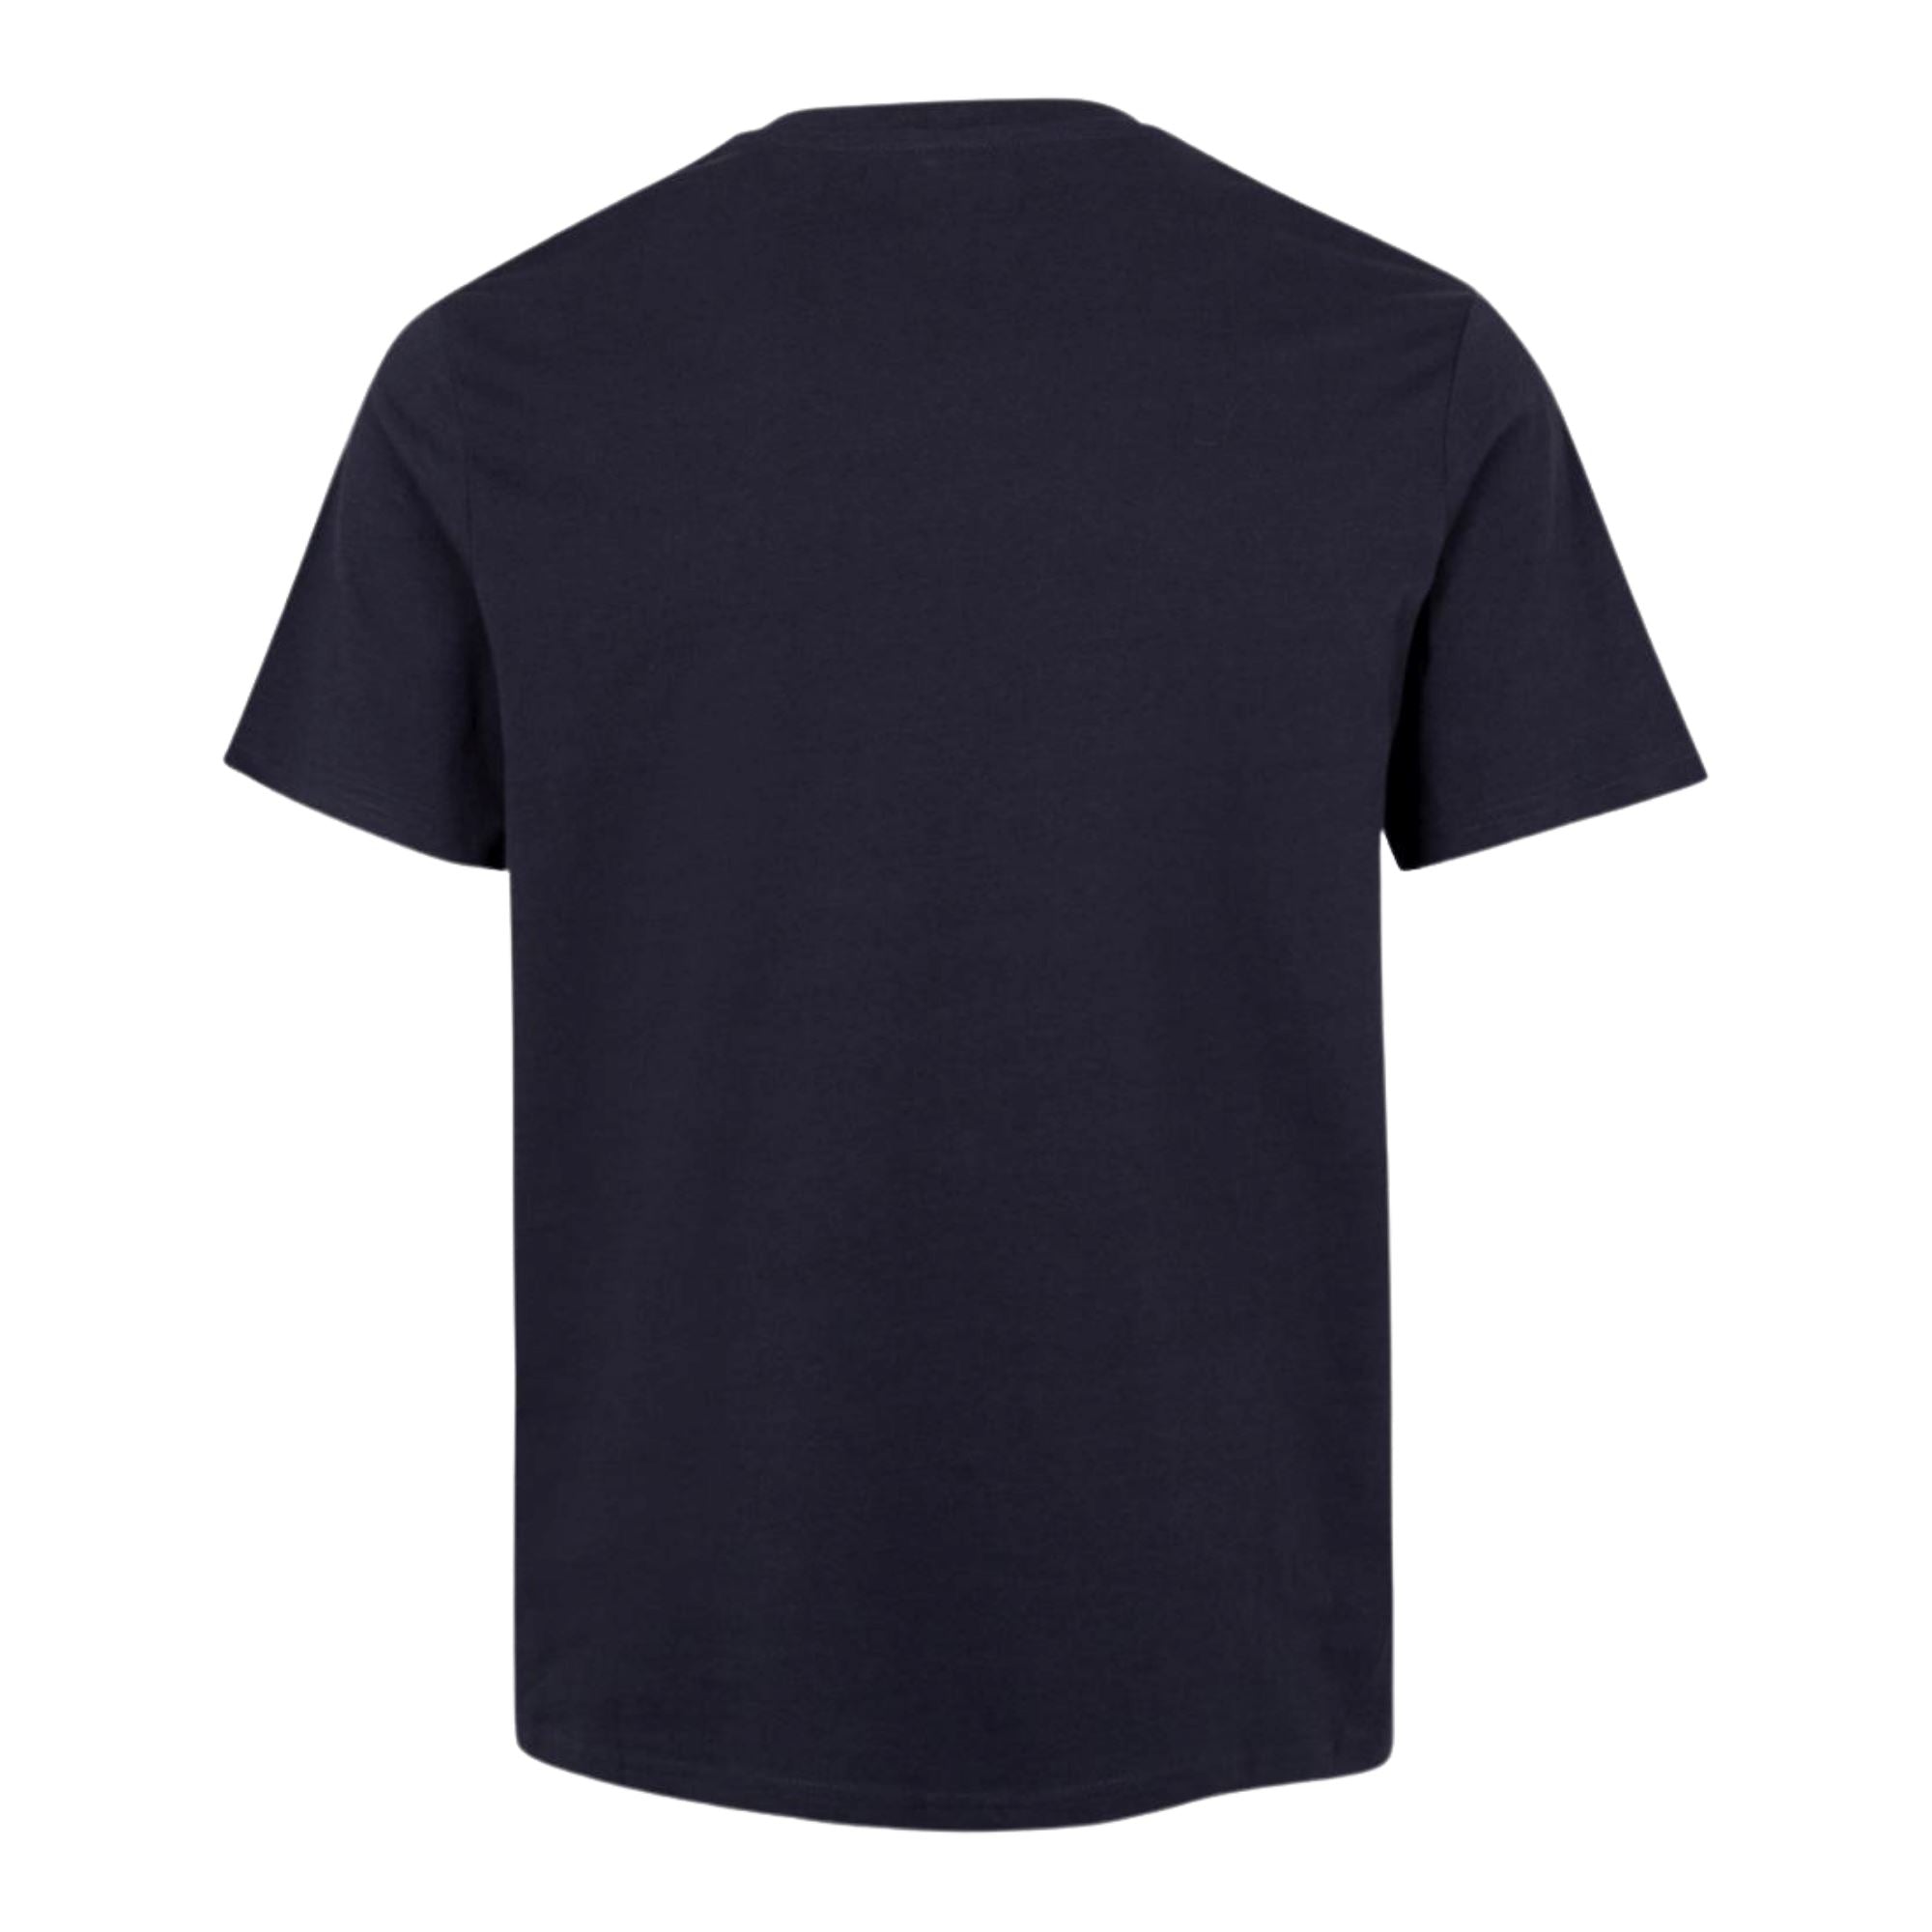 Kappa Meleto T-Shirt Navy Blue - ITASPORT